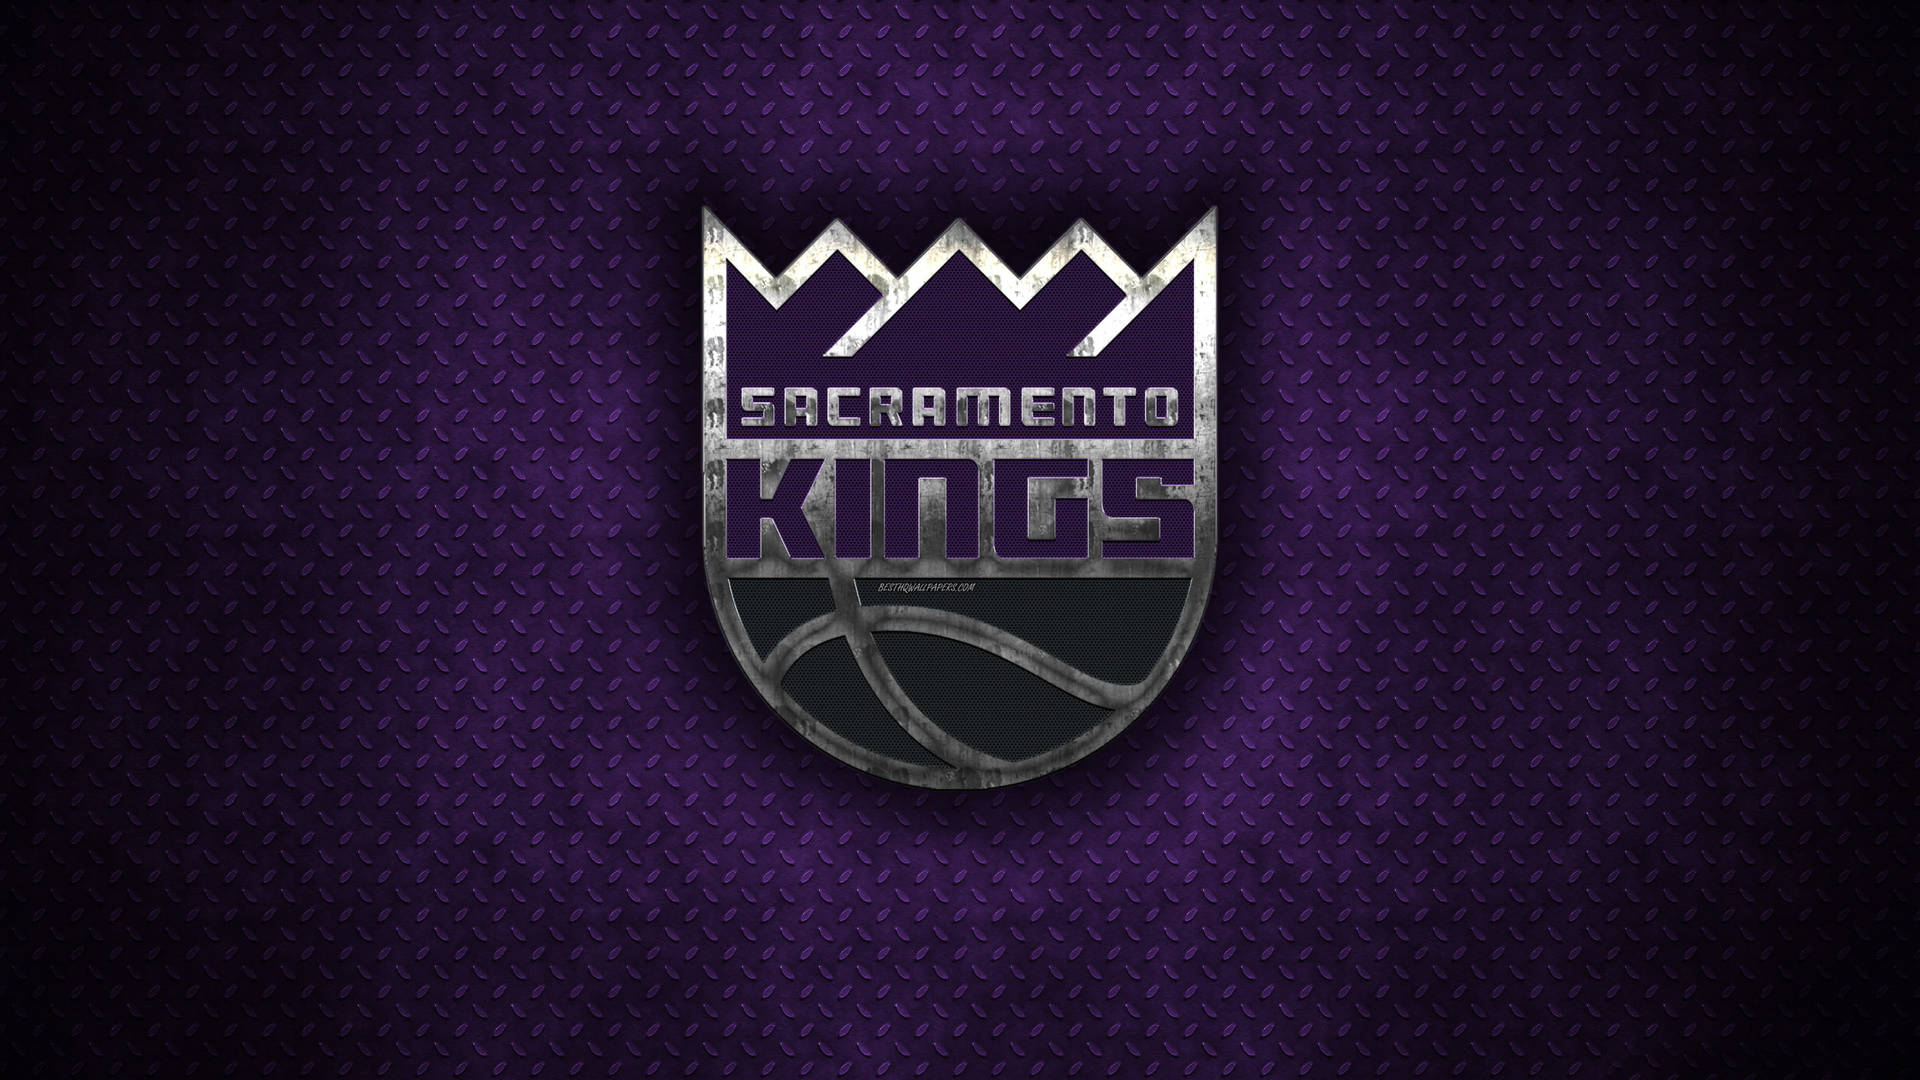 Sacramento Kings In Criss Cross Metal Background